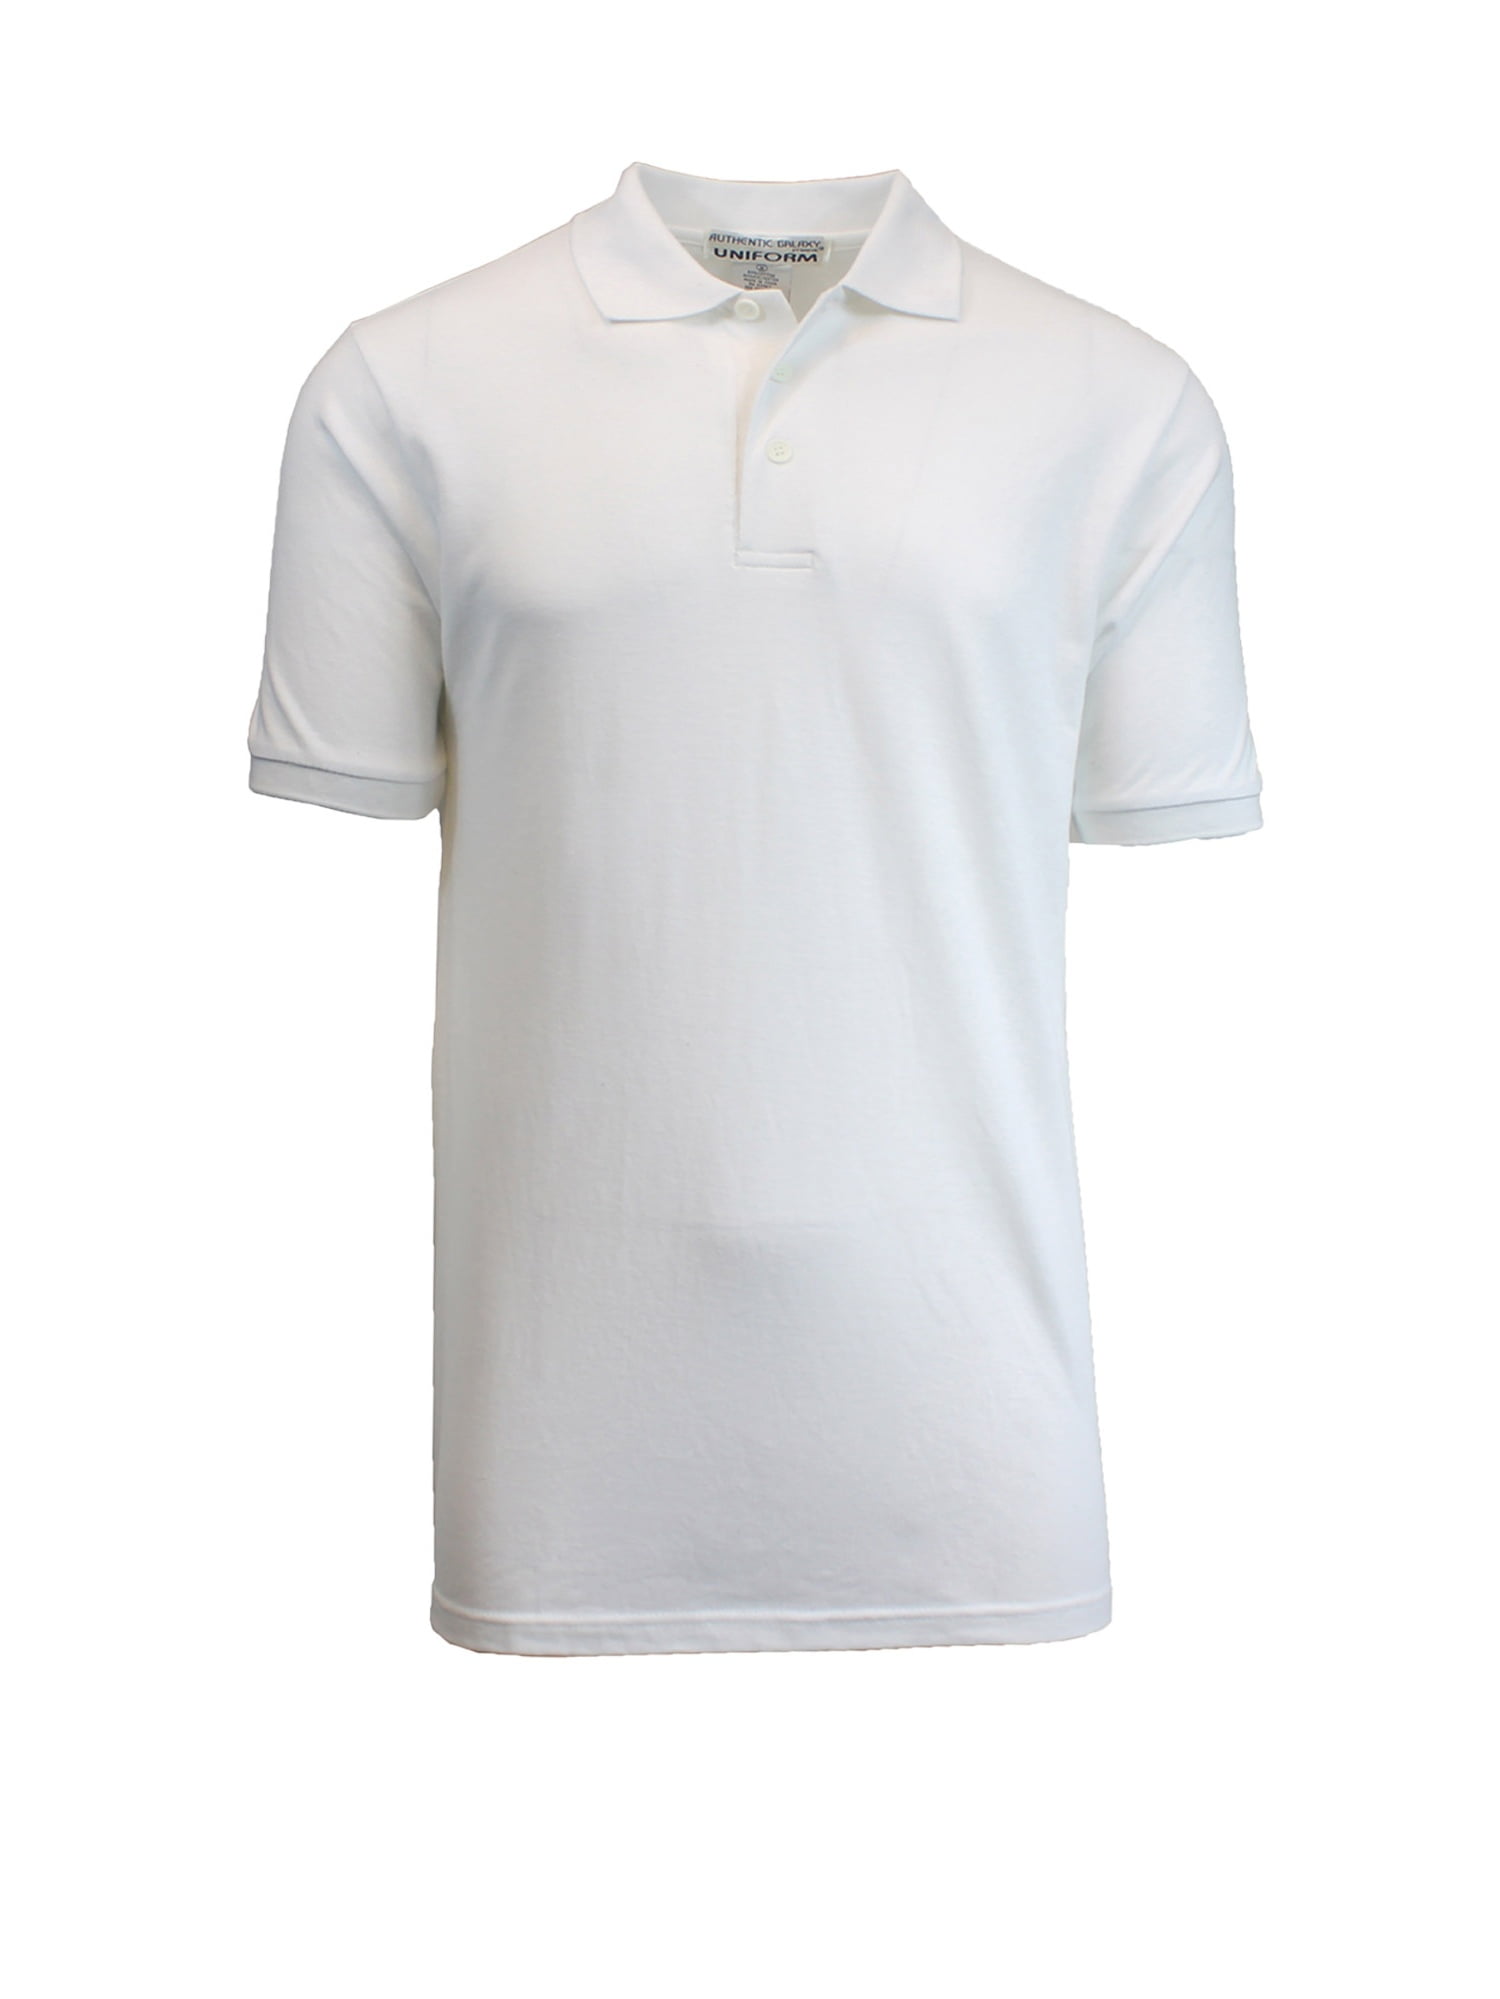 NEW Mens BH Polo Shirt Top Short Sleeve Pique Designer Quality T-Shirt Holiday 